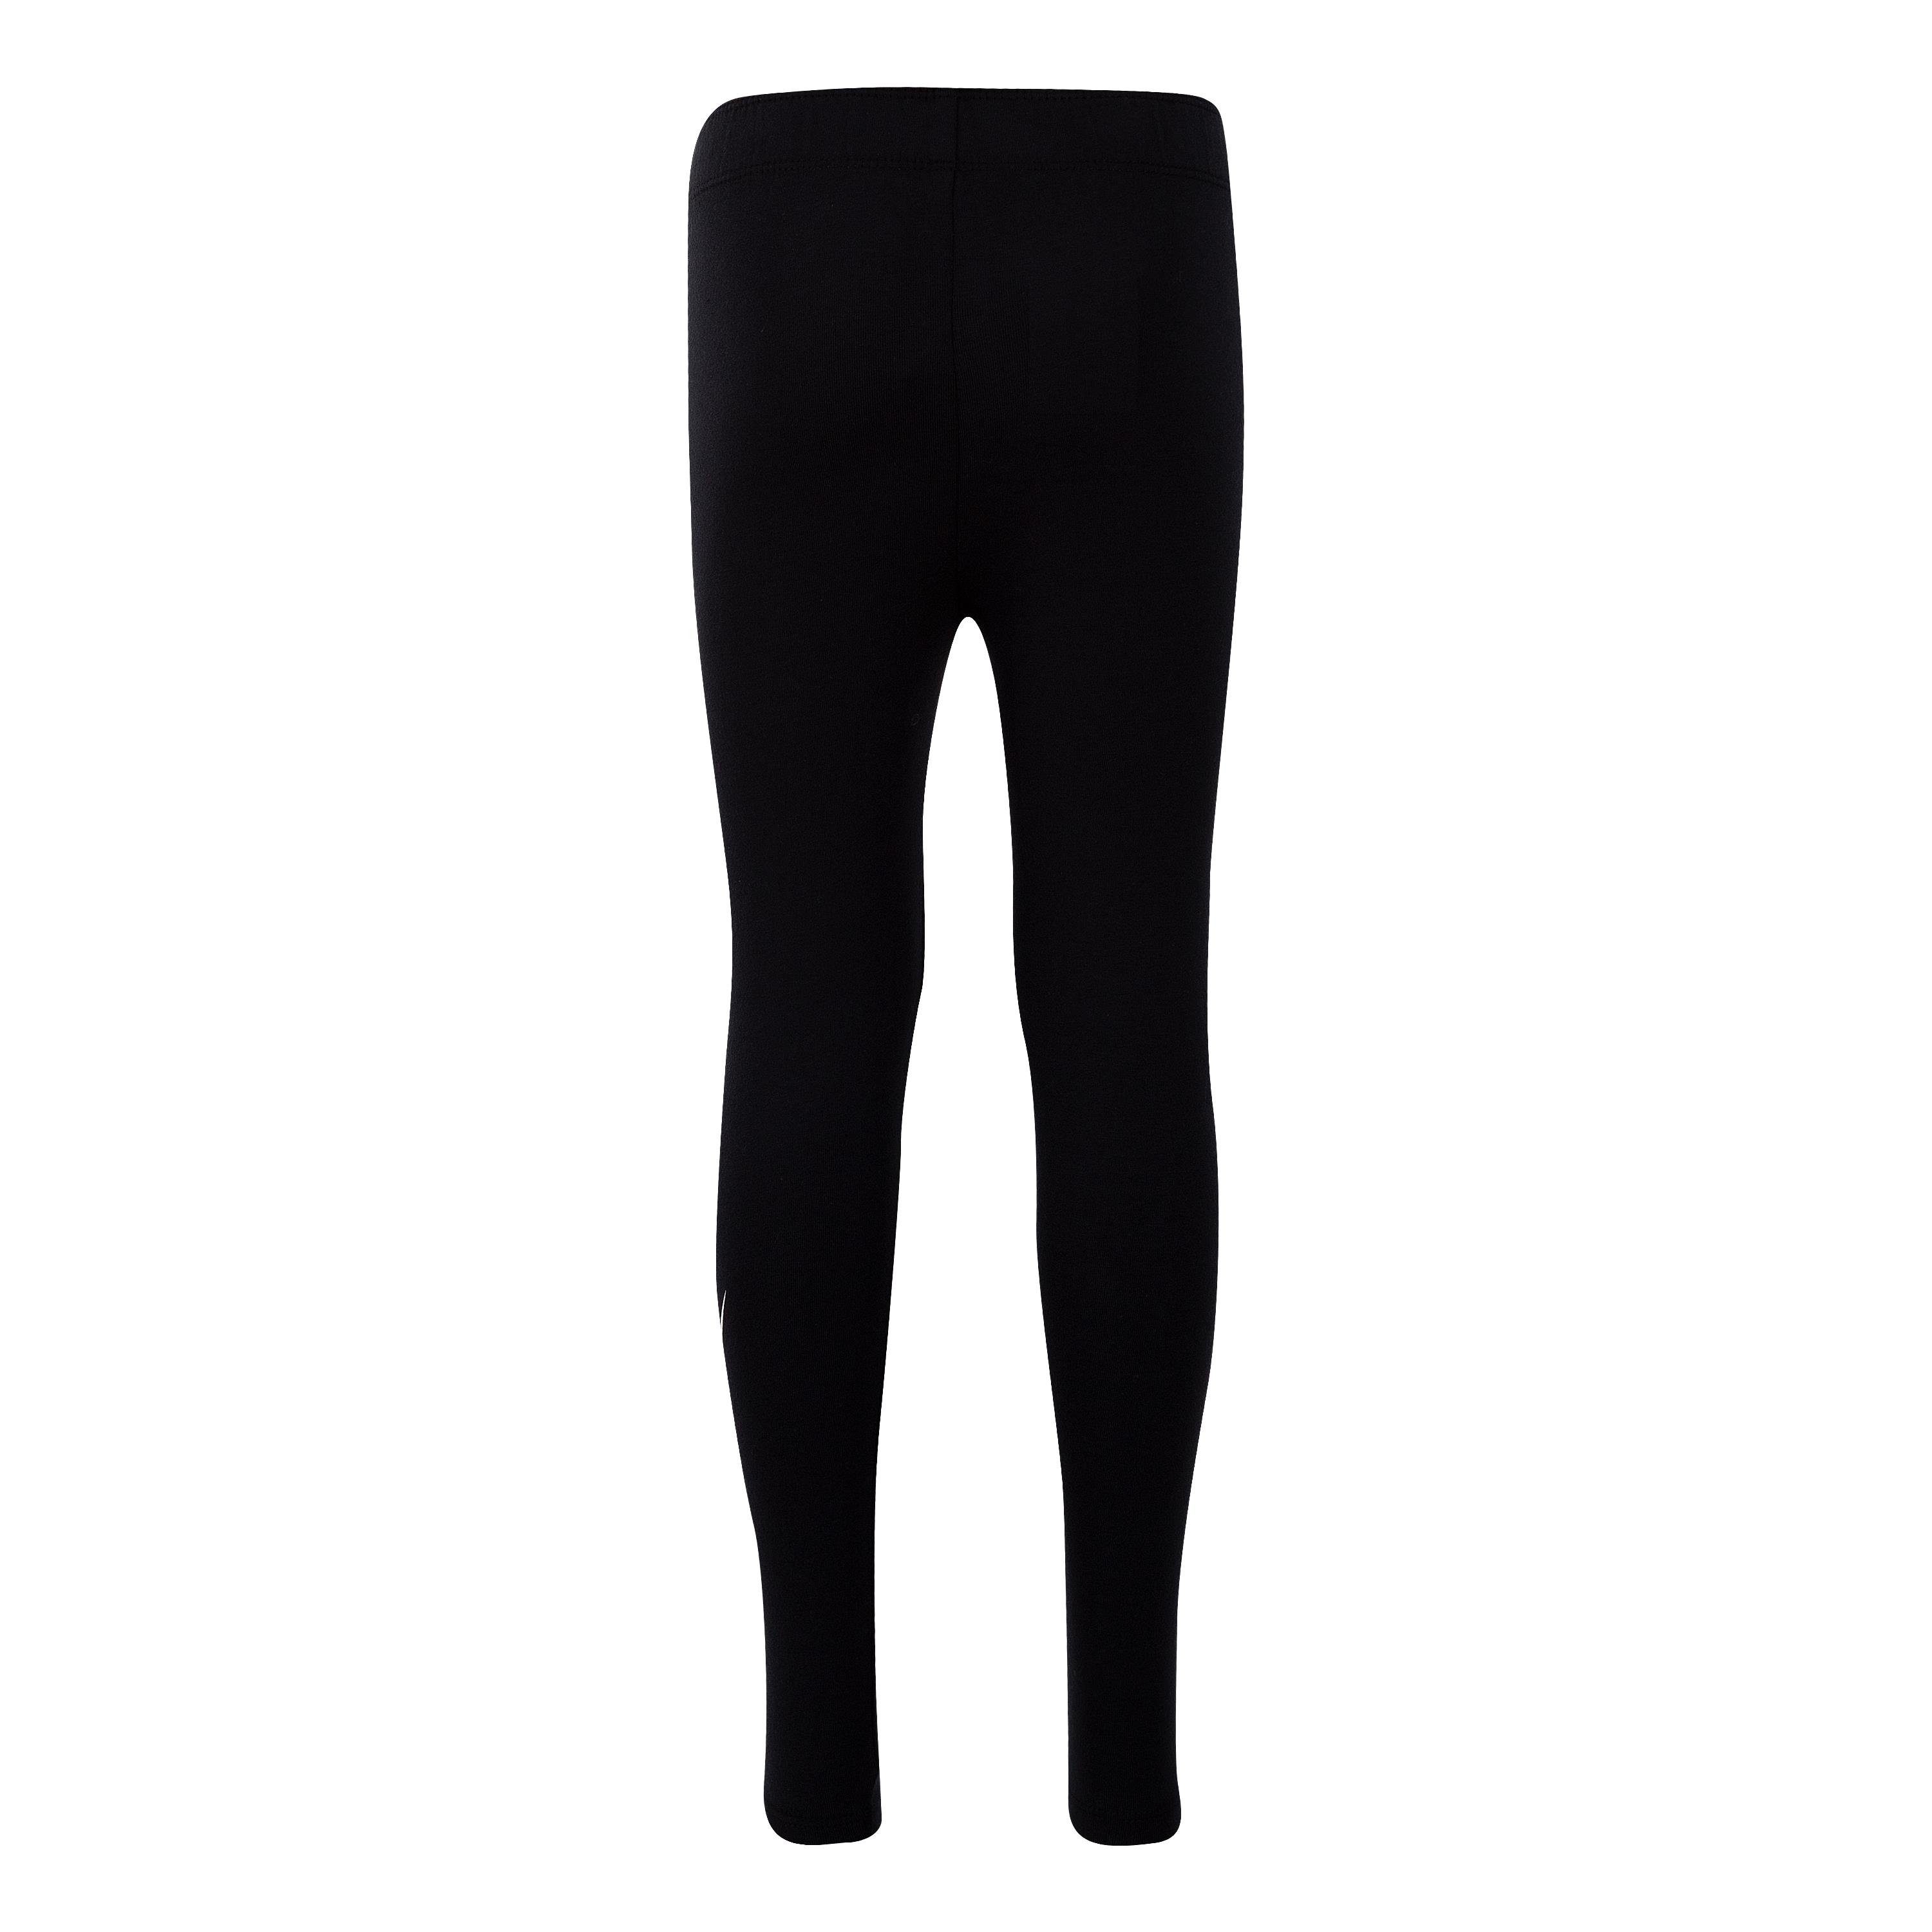 Sportswear G Kinder - LEGGING SEE schwarz für NKG LEG A NSW Nike Leggings